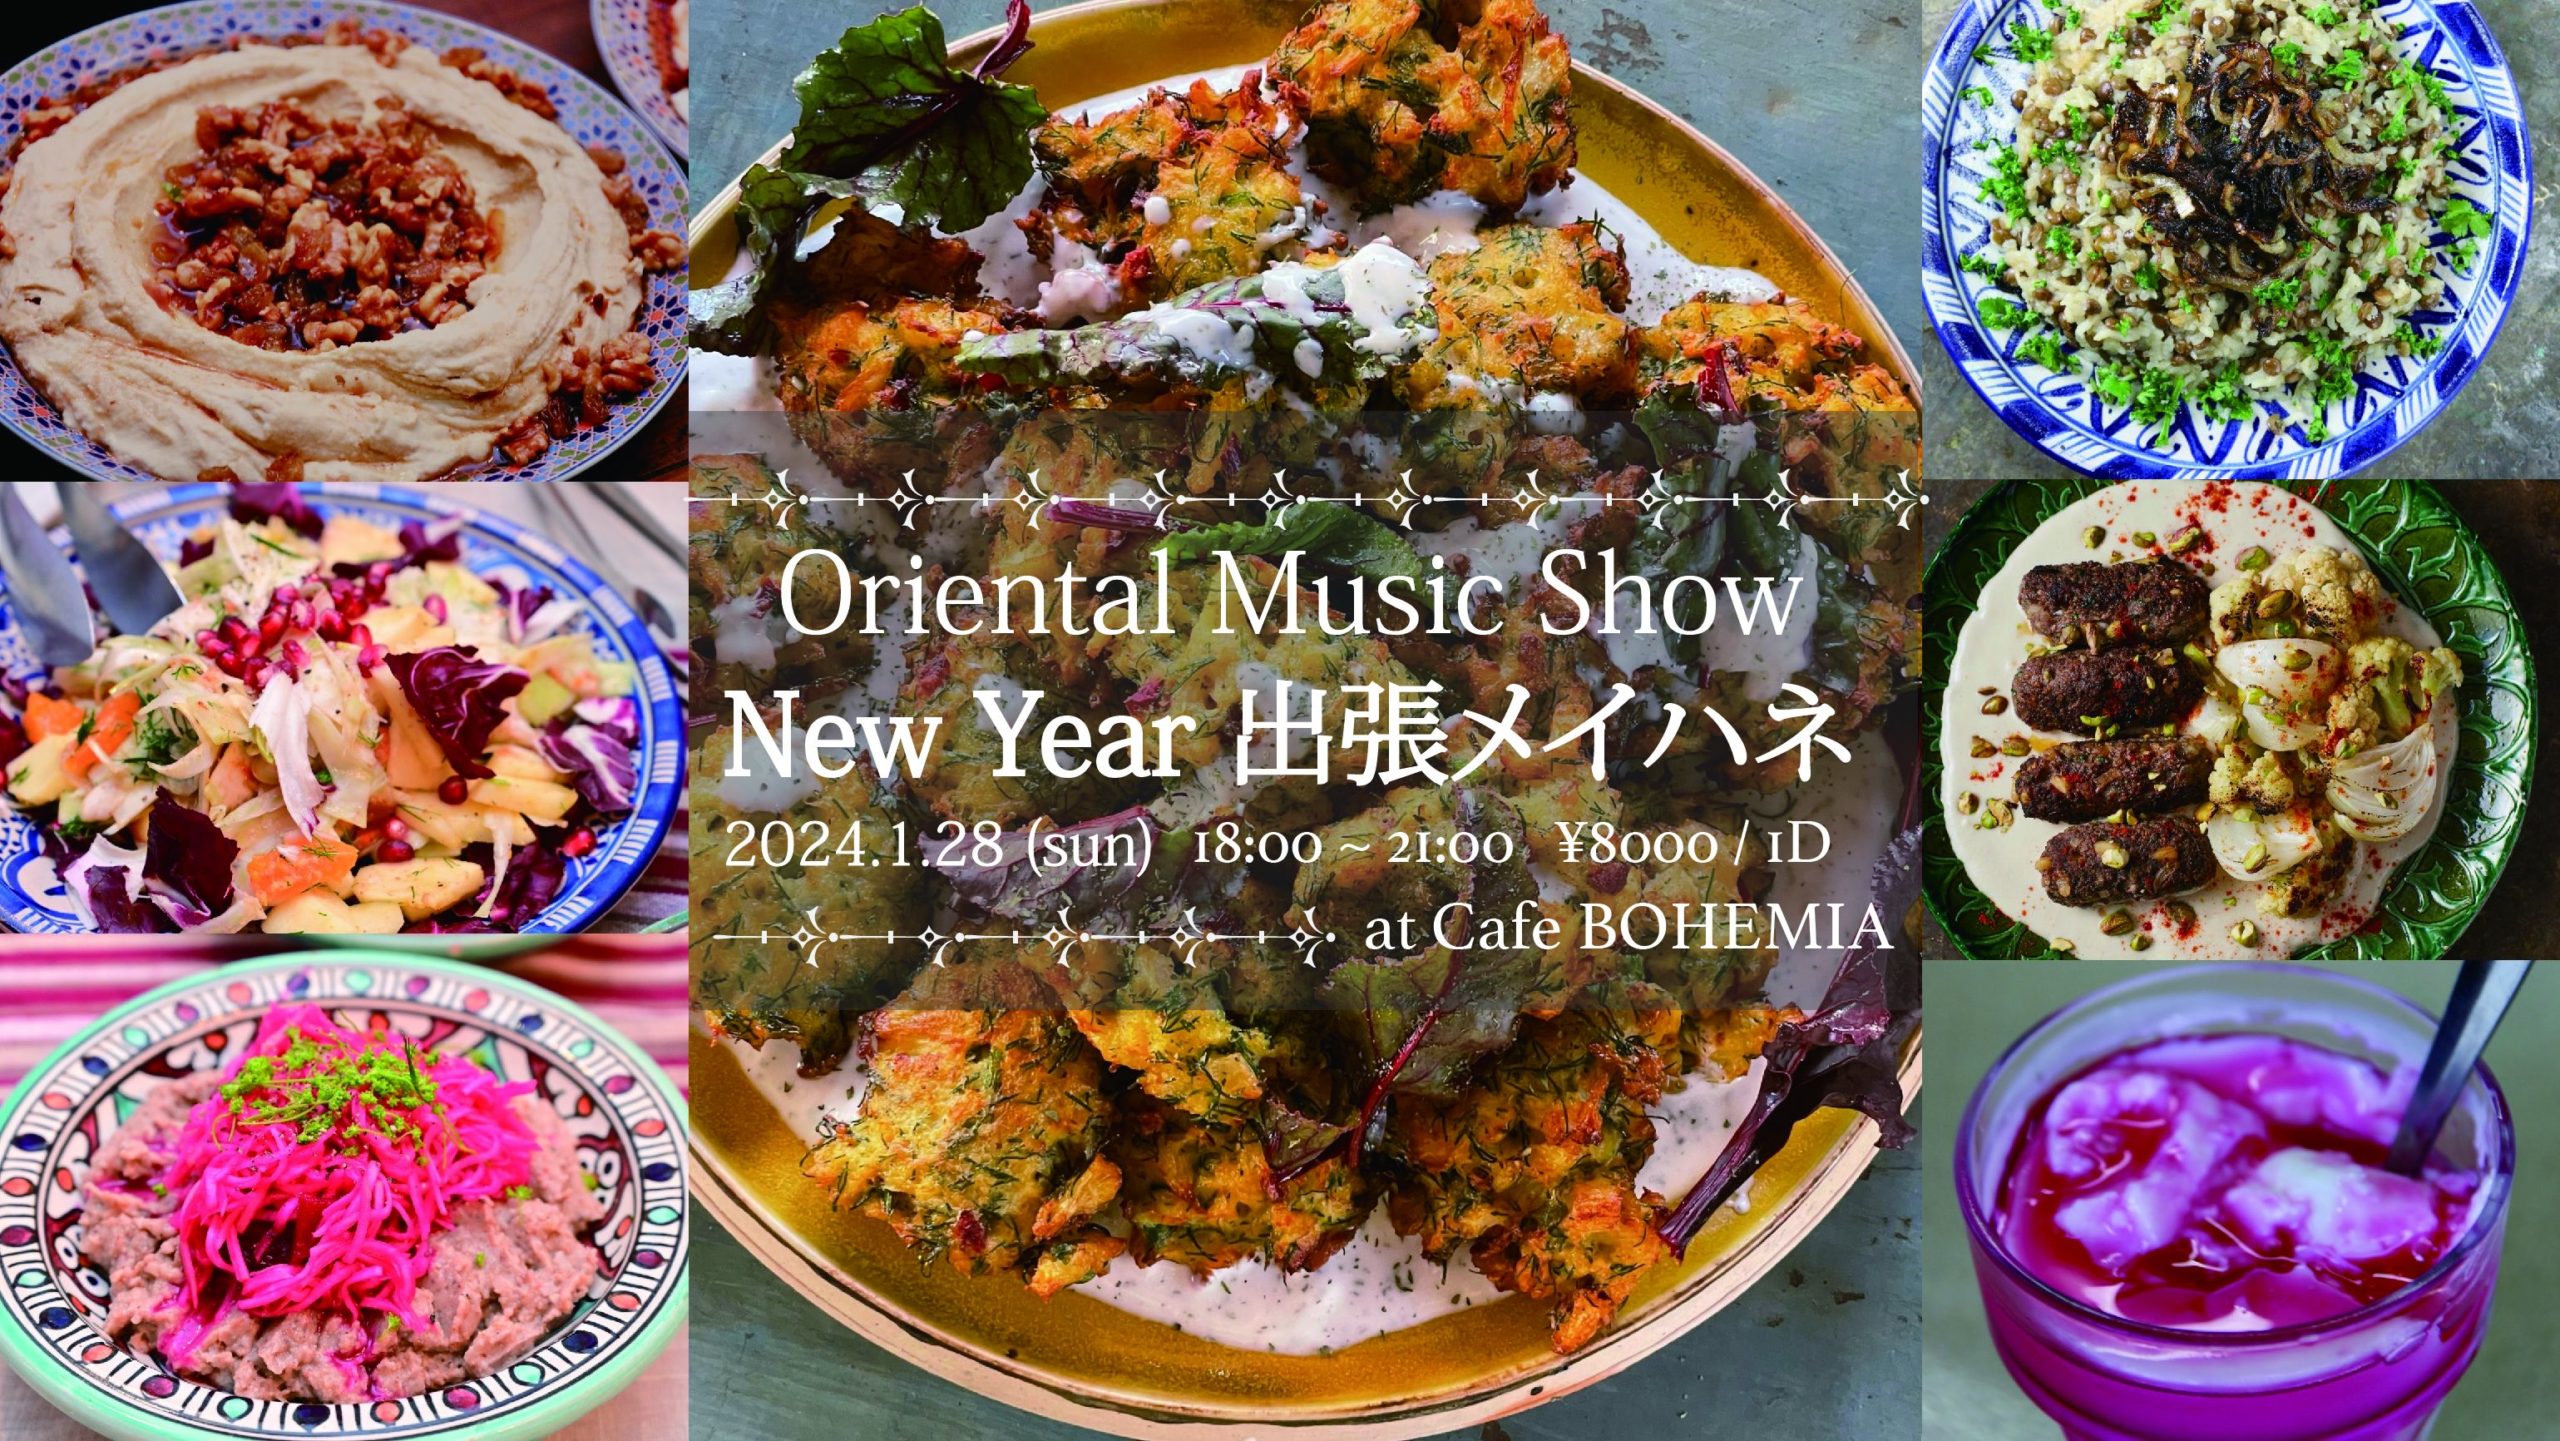 20240128Sun. Oriental Music Show-New Year 出張メイハネ